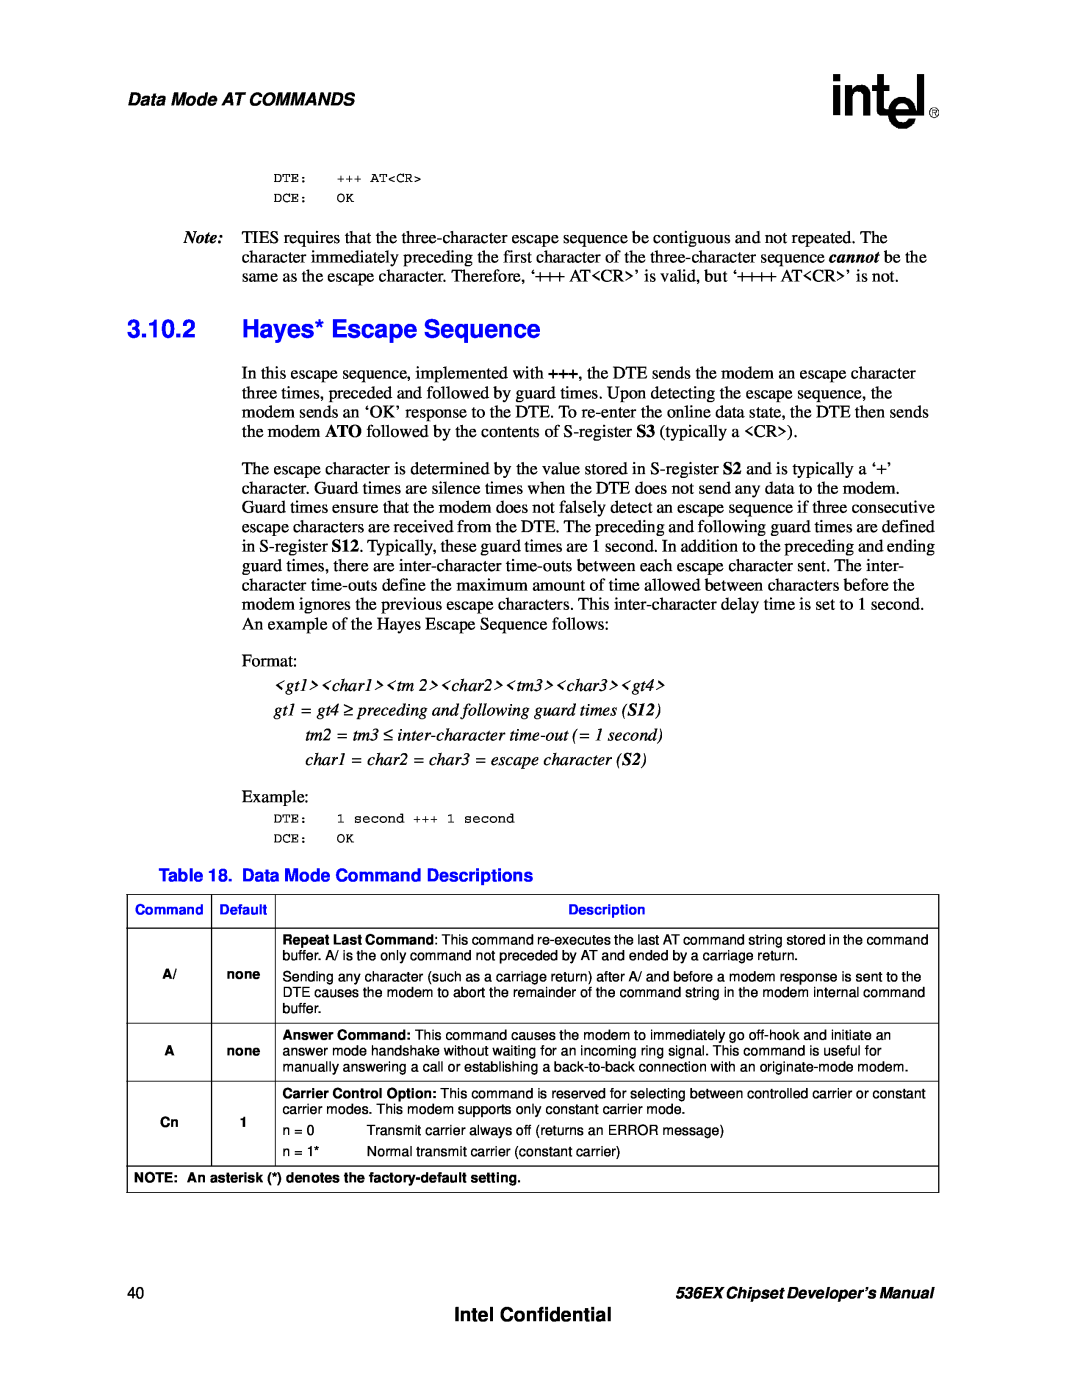 Intel 537EX manual 3.10.2Hayes* Escape Sequence, Intel Confidential, Data Mode AT COMMANDS, Data Mode Command Descriptions 